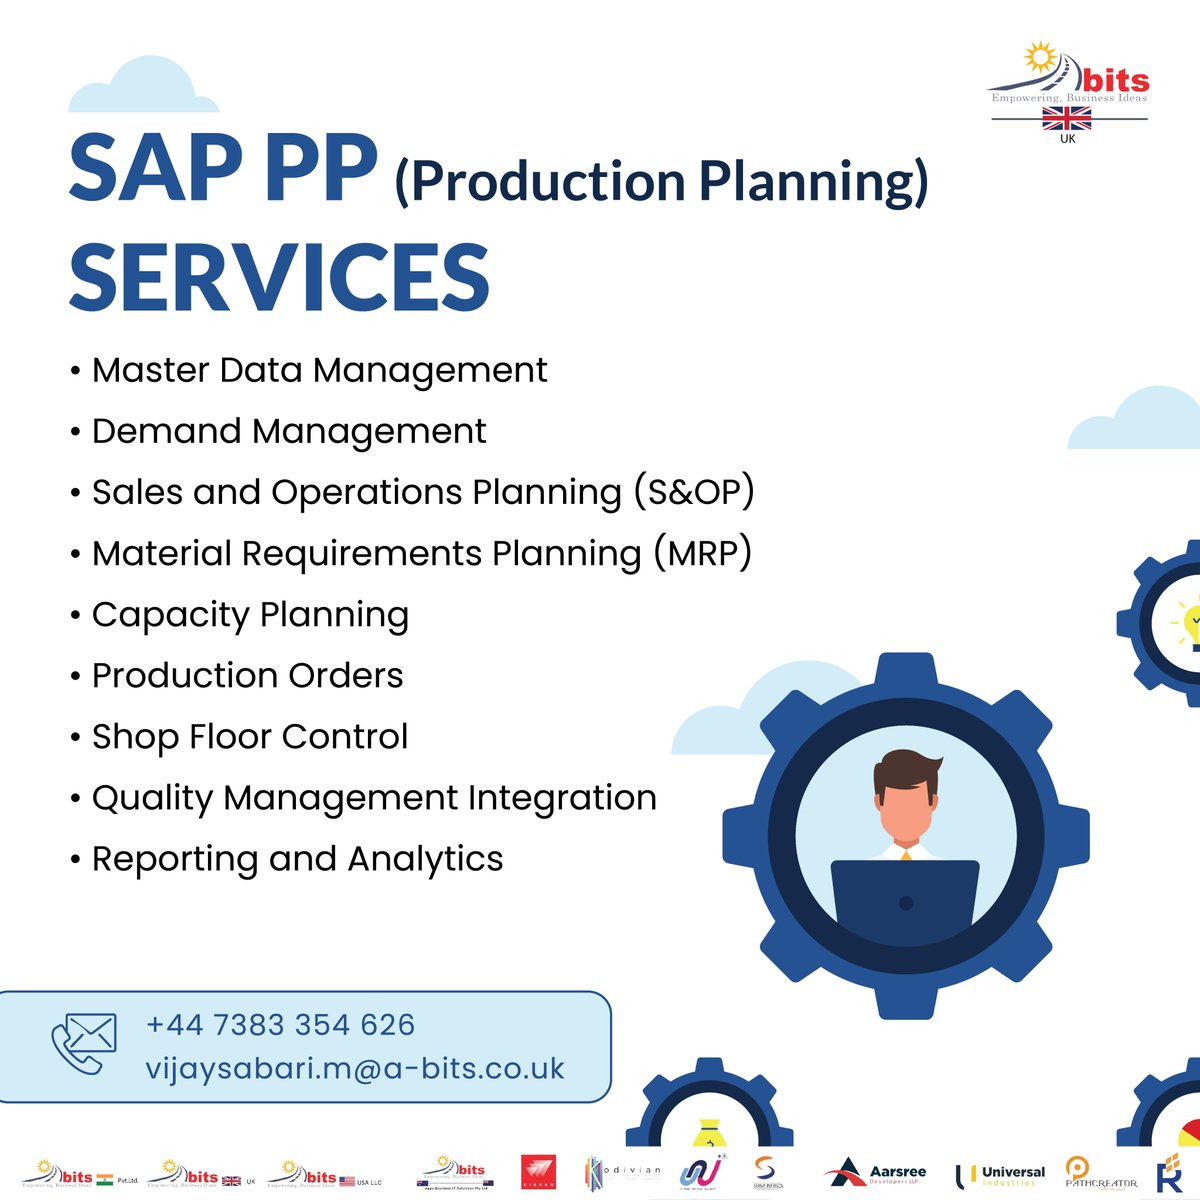 SAP PP (Production Planning) SERVICES

#abitsuk #abits #sap #sapcommunity #sapconsultant #sapcareers #sap #ssgroup #ssgroupofcompanies #demandmanagement #capacityplanning #productionorders #salesandoperationsplanning